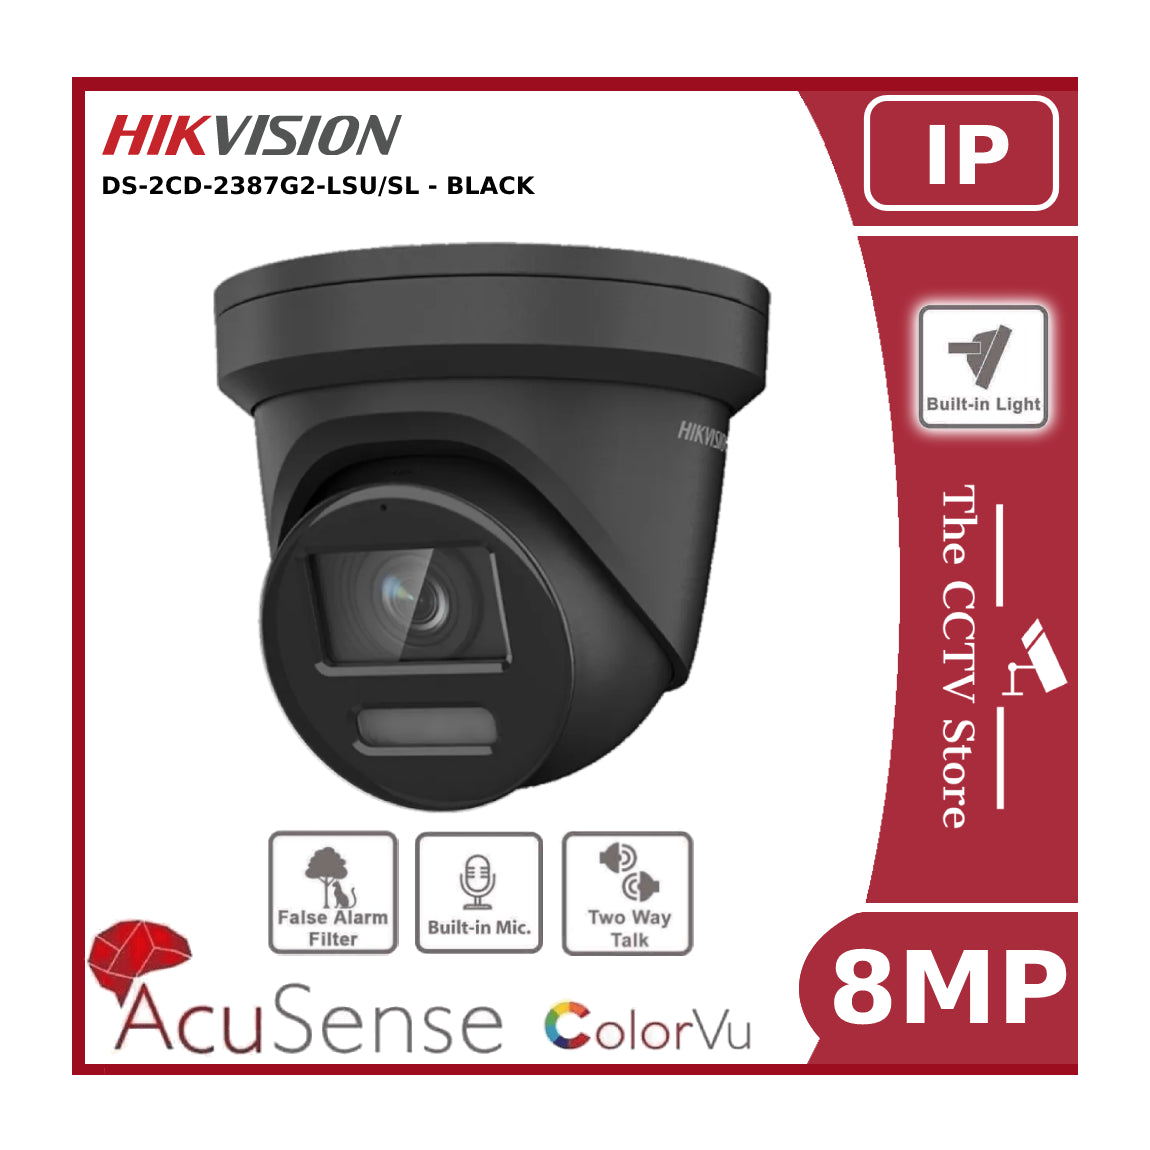 8MP Hikvision DS-2CD2387G2-LSU/SL 4K ColorVu IP CCTV Camera PoE With Two Way Talk - Black 2.8mm